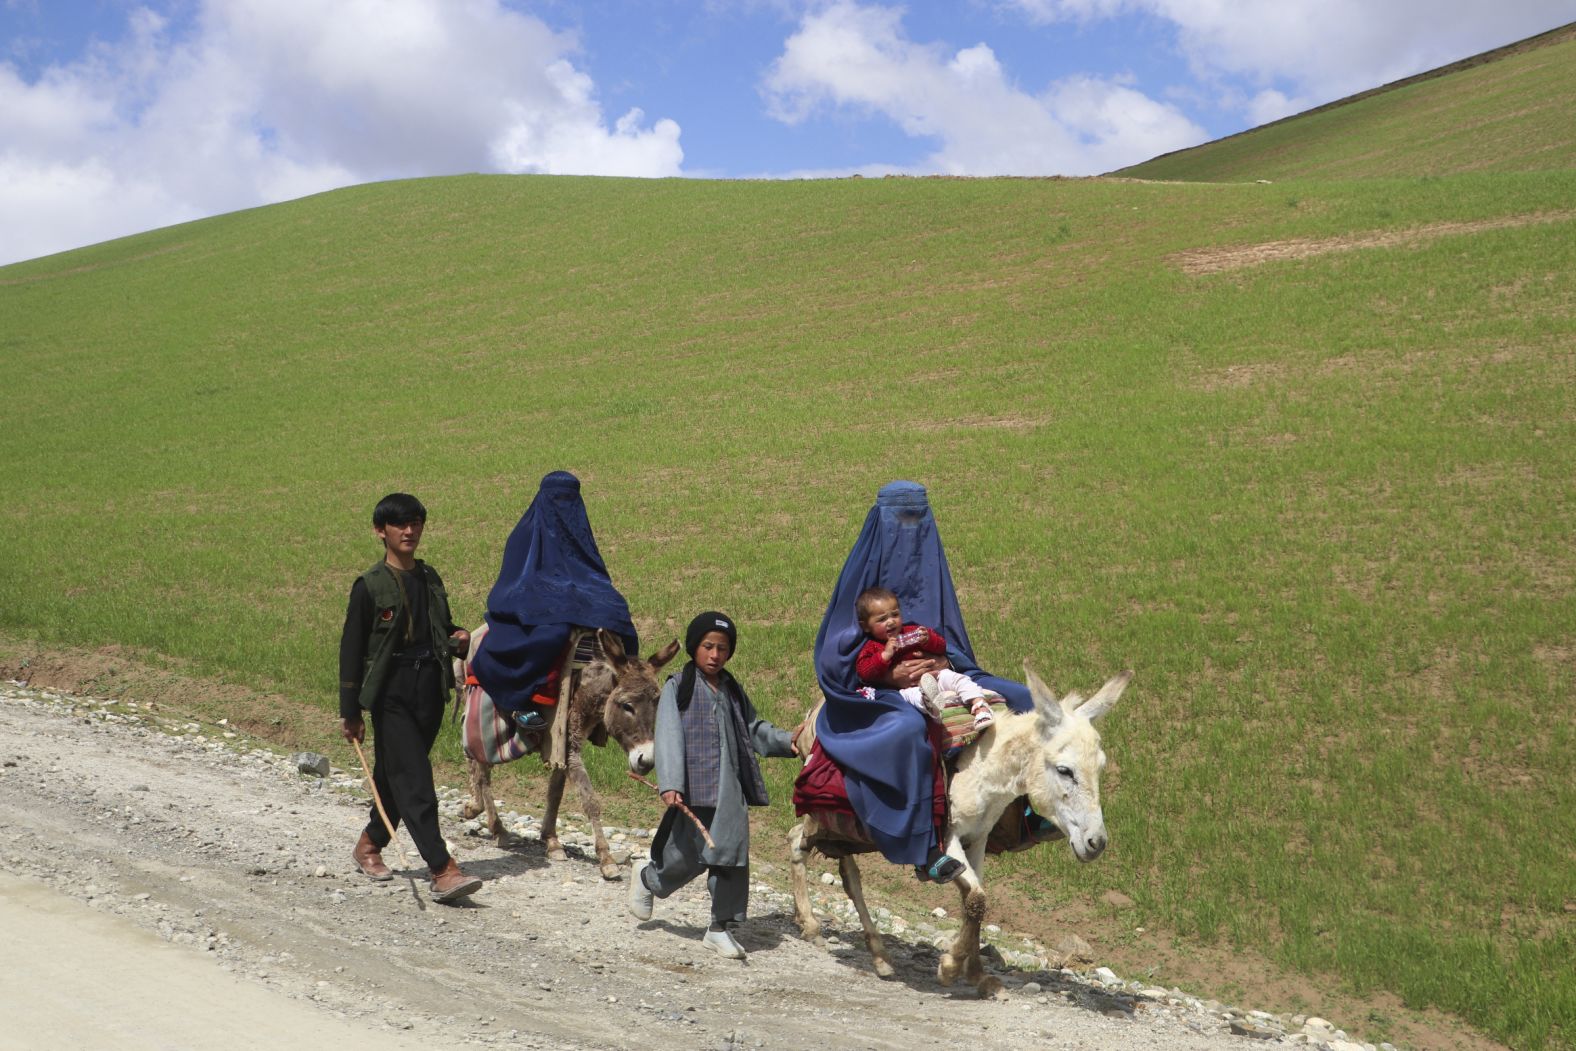 Women ride donkeys alongside children on a road near the Afghan village of Shah Mari on Wednesday, May 1.